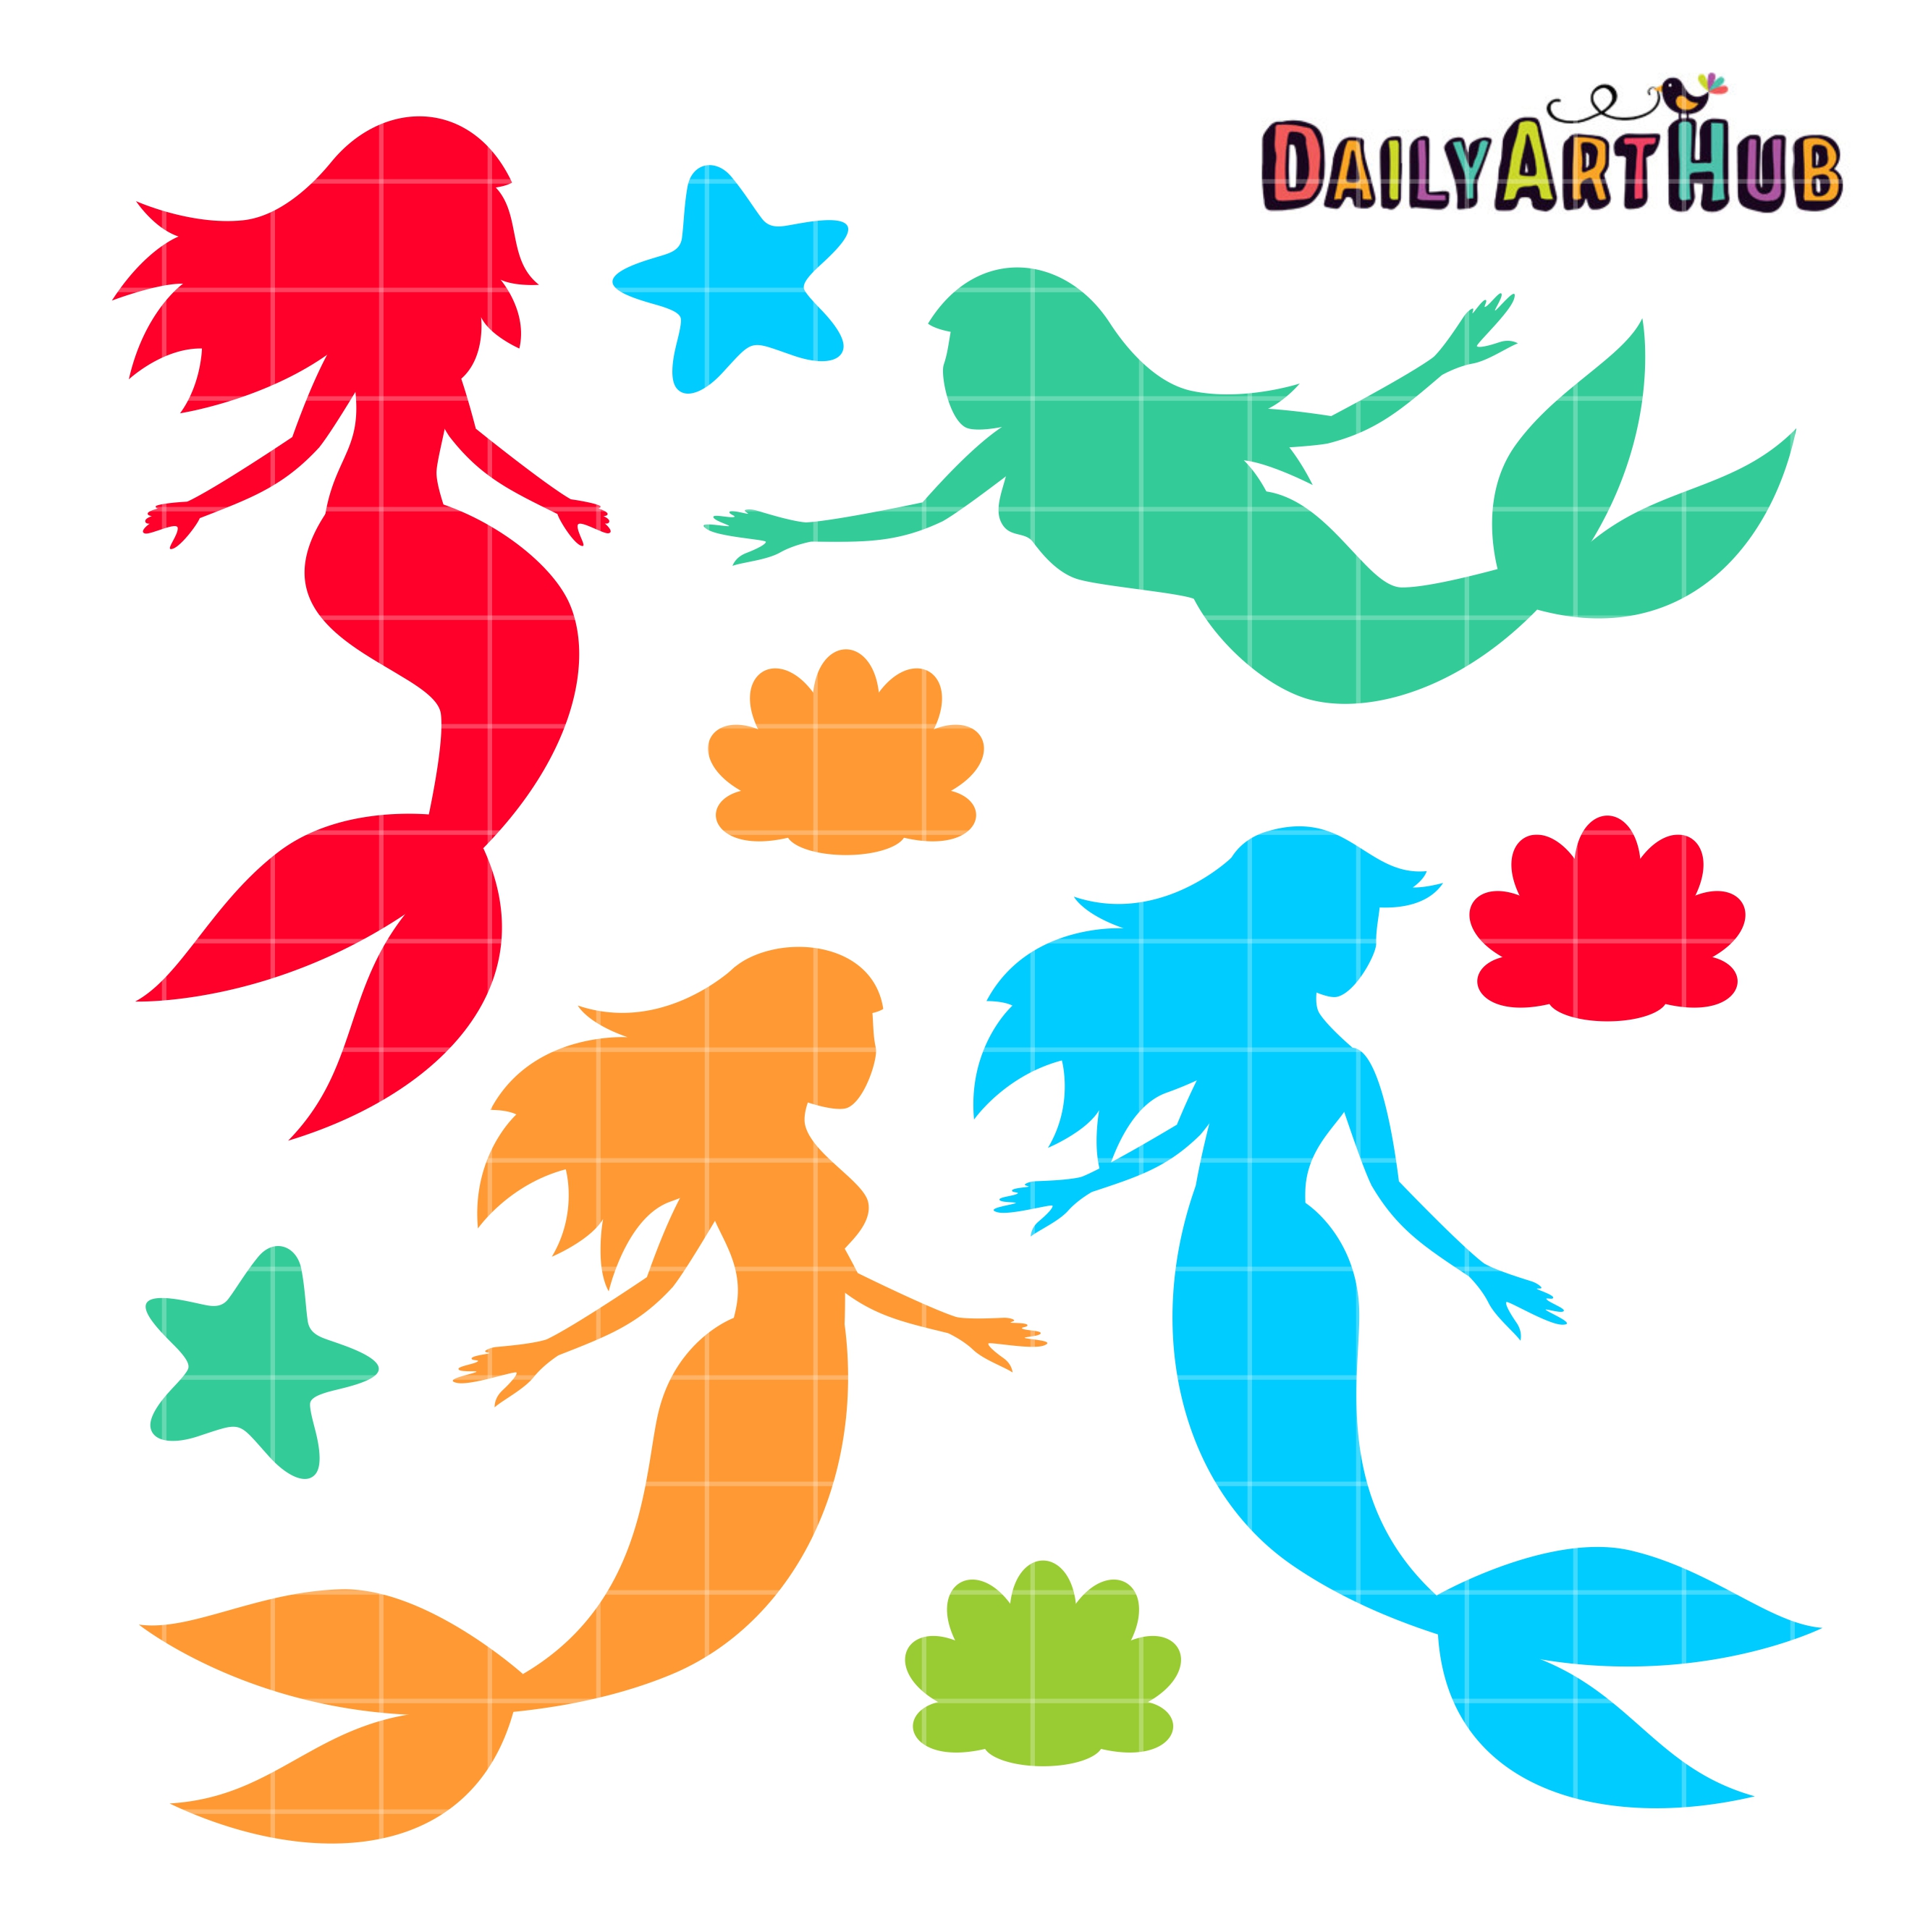 Mermaid Silhouettes Clip Art Set - Daily Art Hub - Free ...